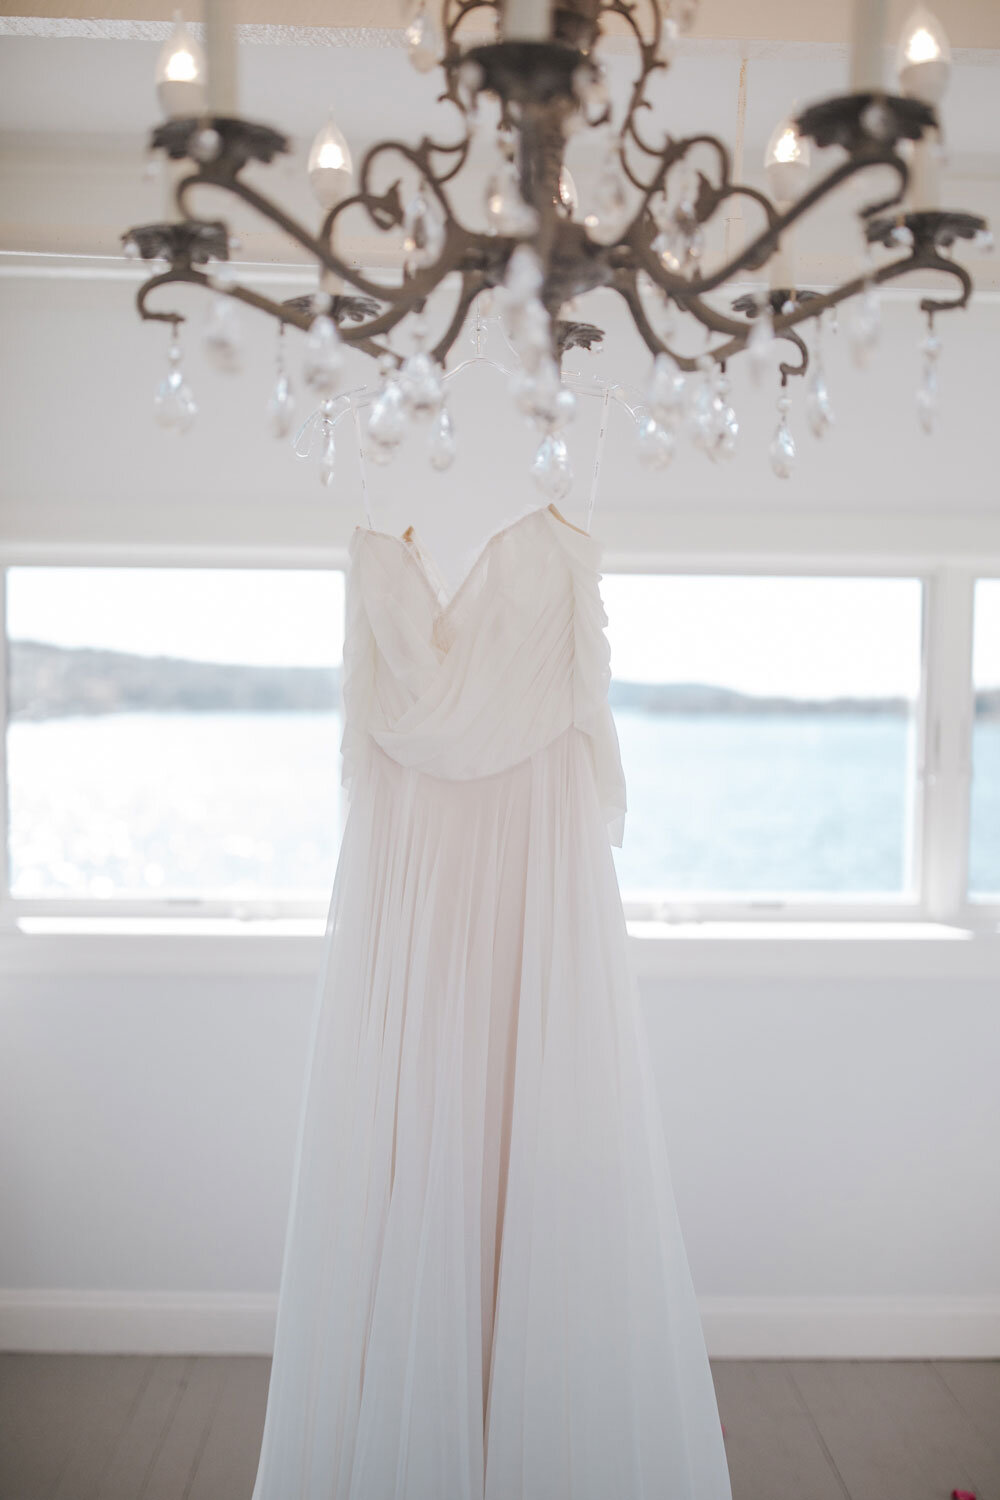 a brides dress hanging